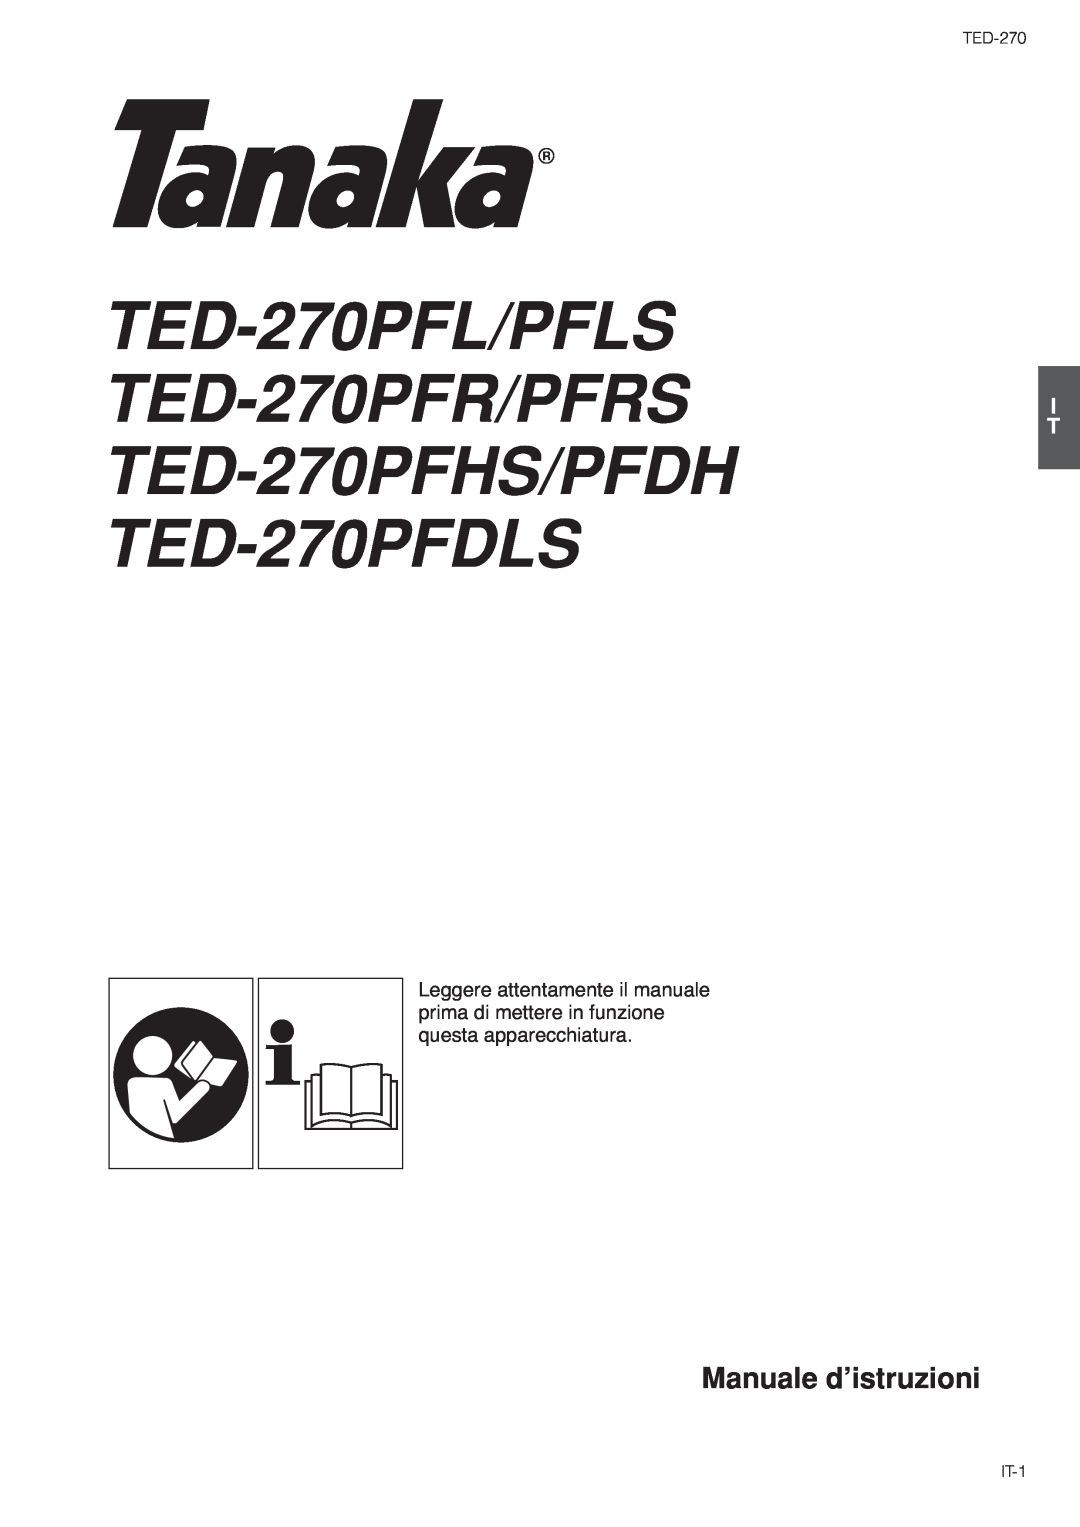 Tanaka owner manual Manuale d’istruzioni, IT-1, TED-270PFL/PFLS TED-270PFR/PFRS TED-270PFHS/PFDH TED-270PFDLS 